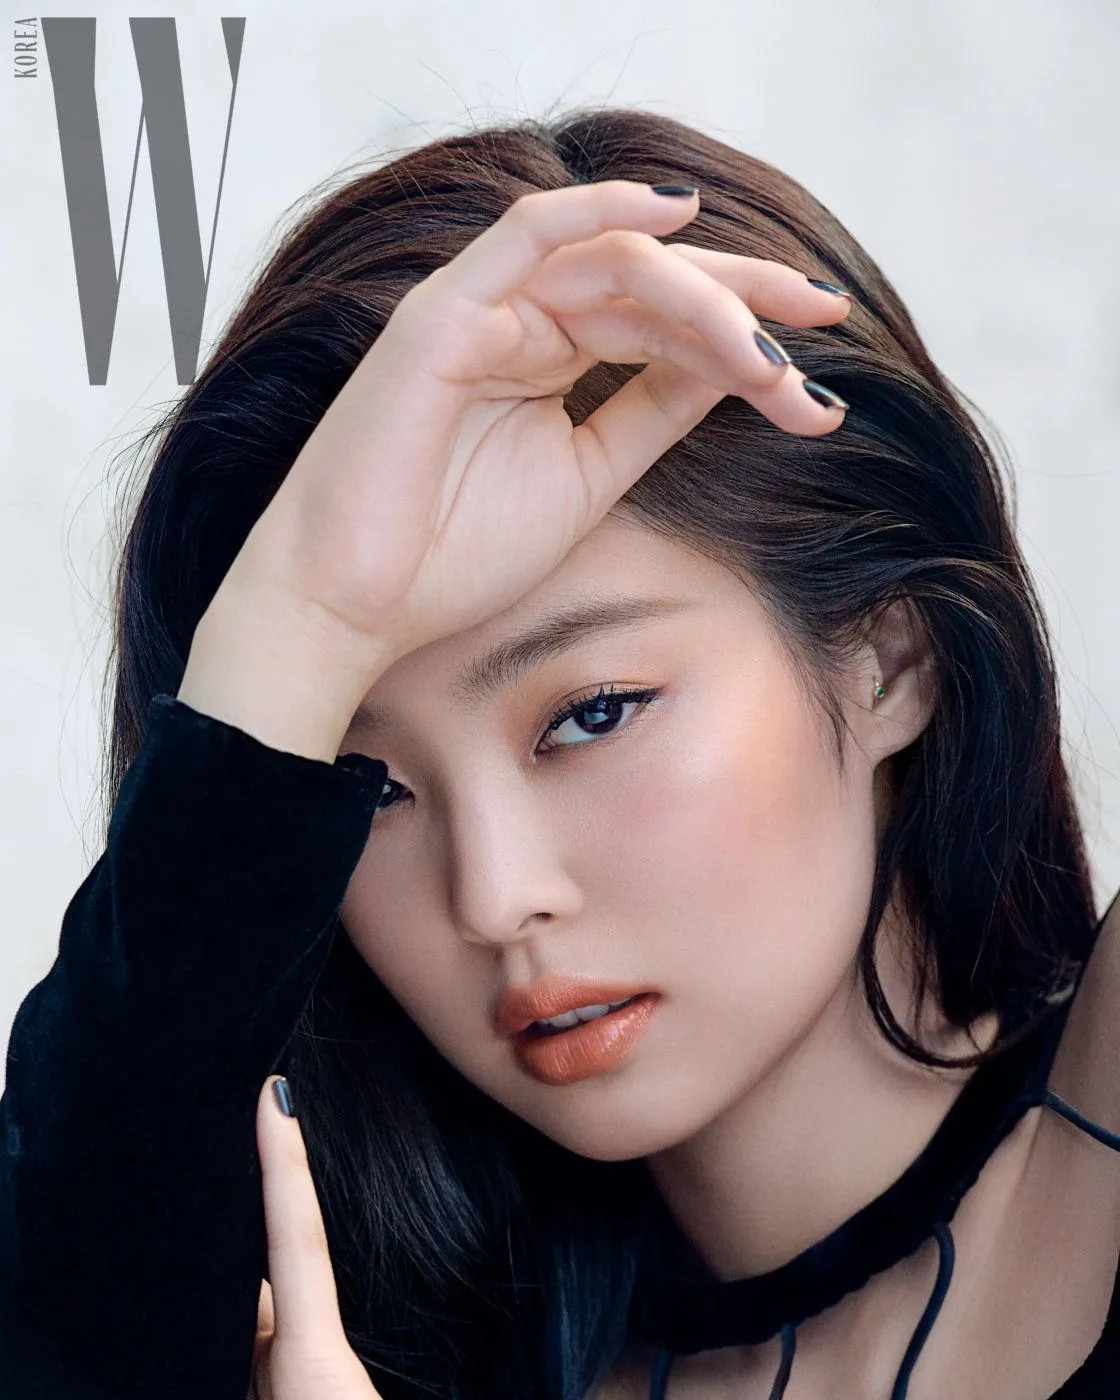 BLACKPINK Jennie for W Korea magazine February 2020 issue | Kpopping